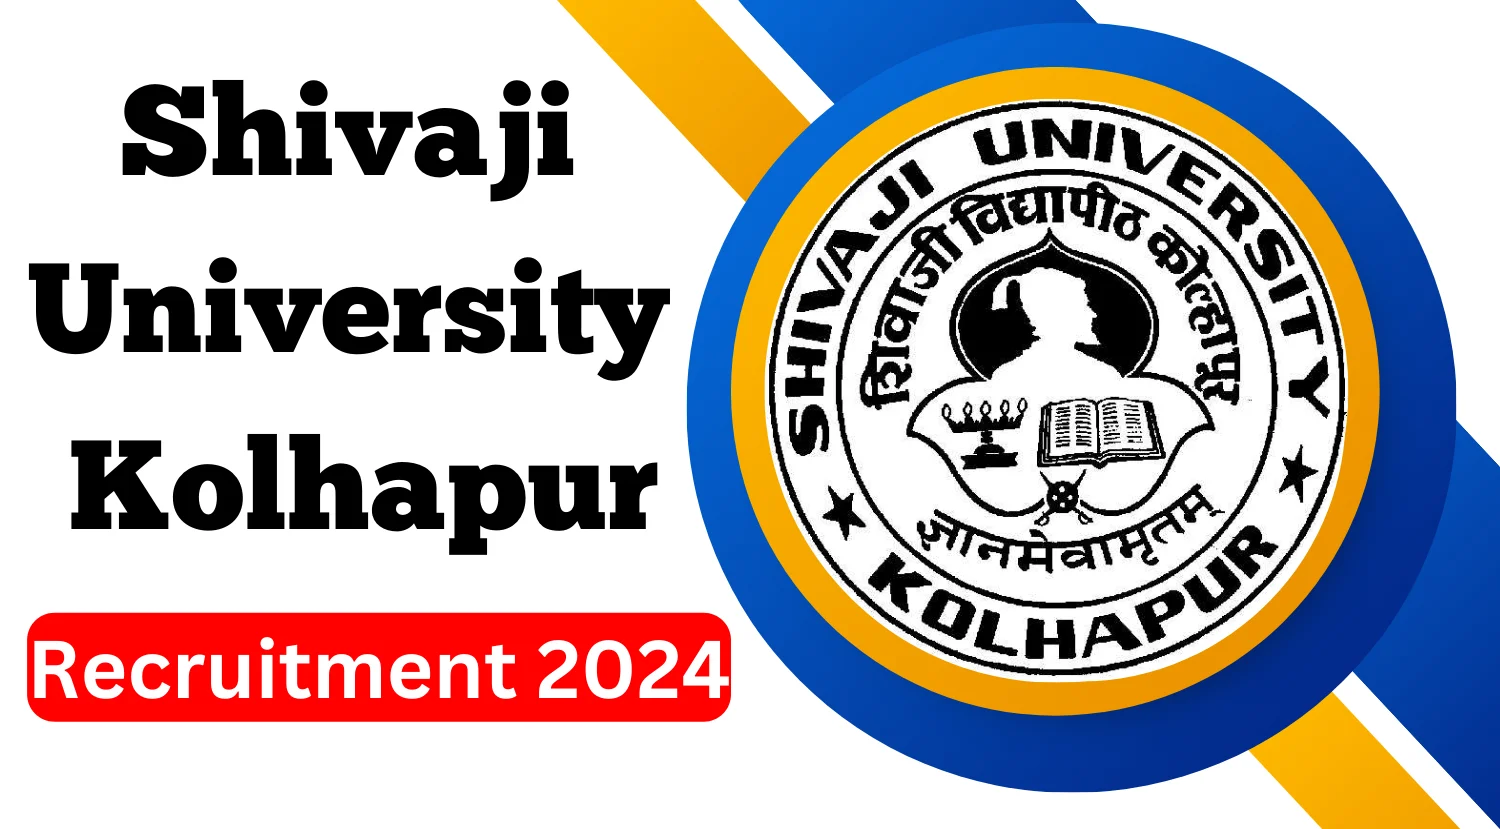 Shivaji University Recruitment 2024